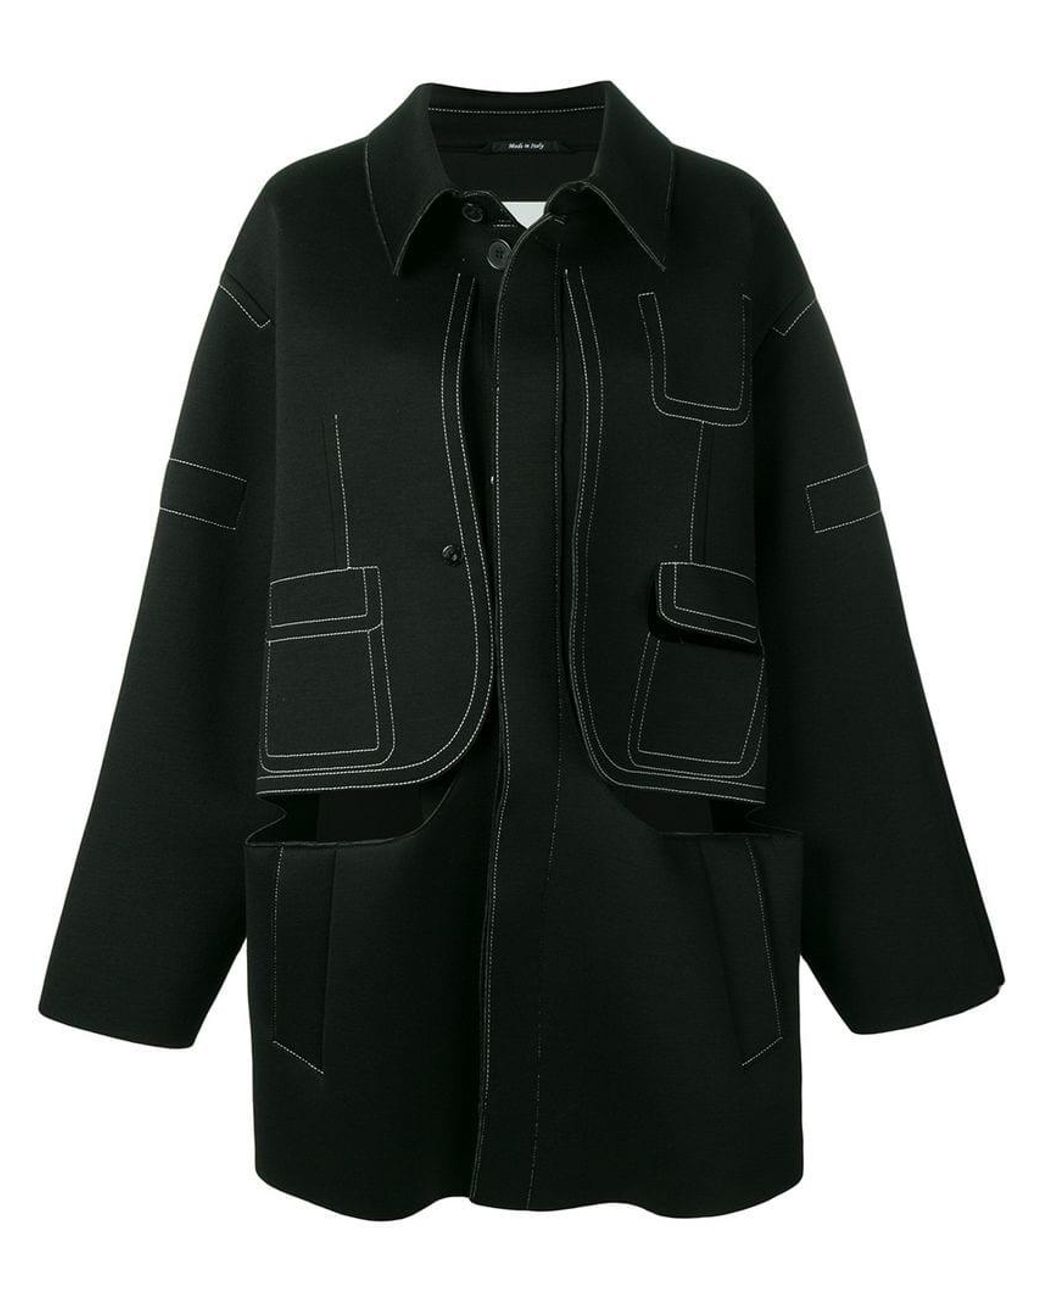 Maison Margiela Contrast Stitch Oversized Coat in Black - Lyst